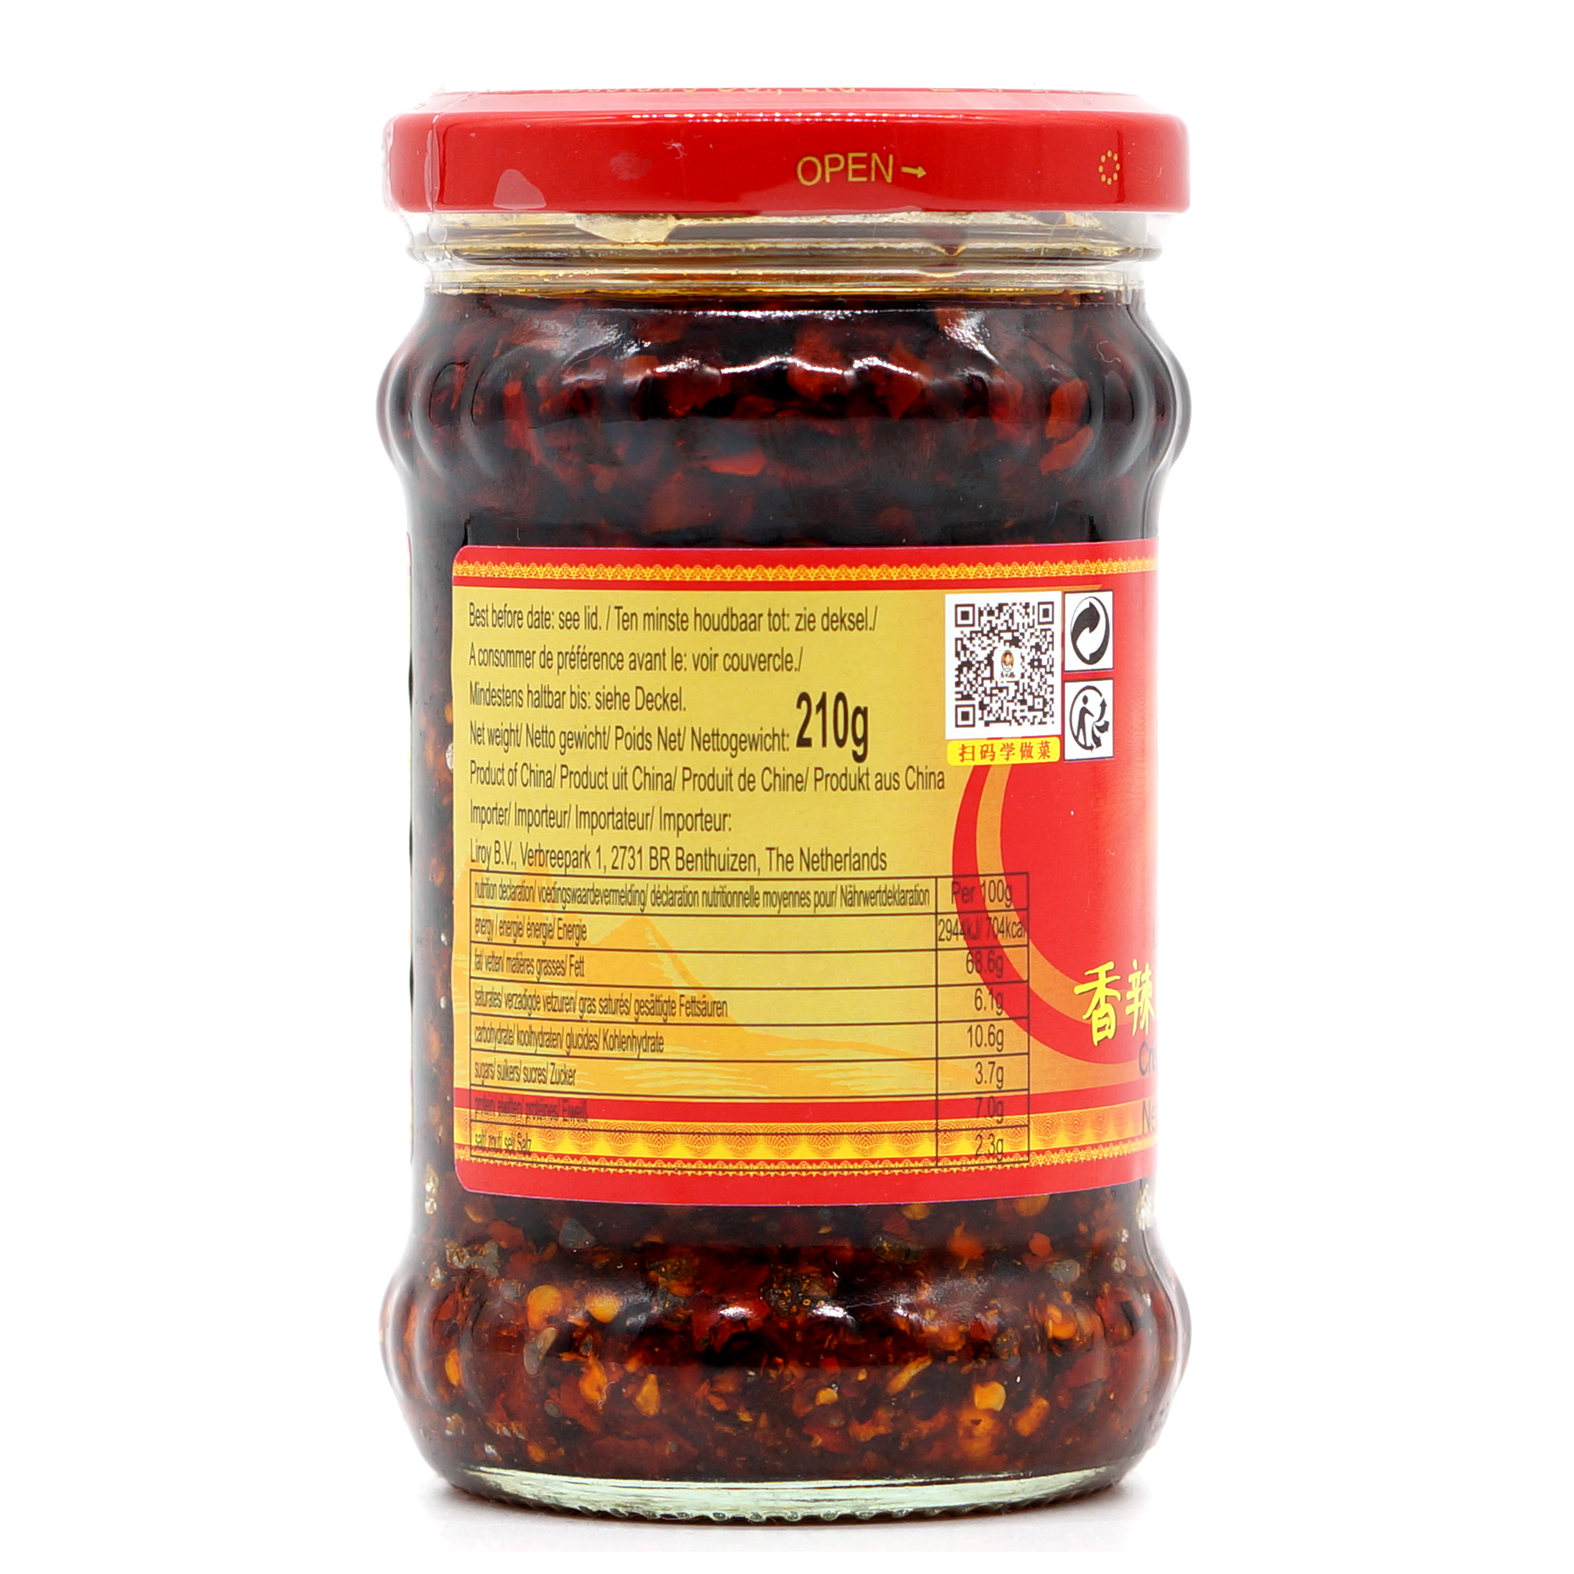 Chilipaste in Öl - Laoganma - 210g